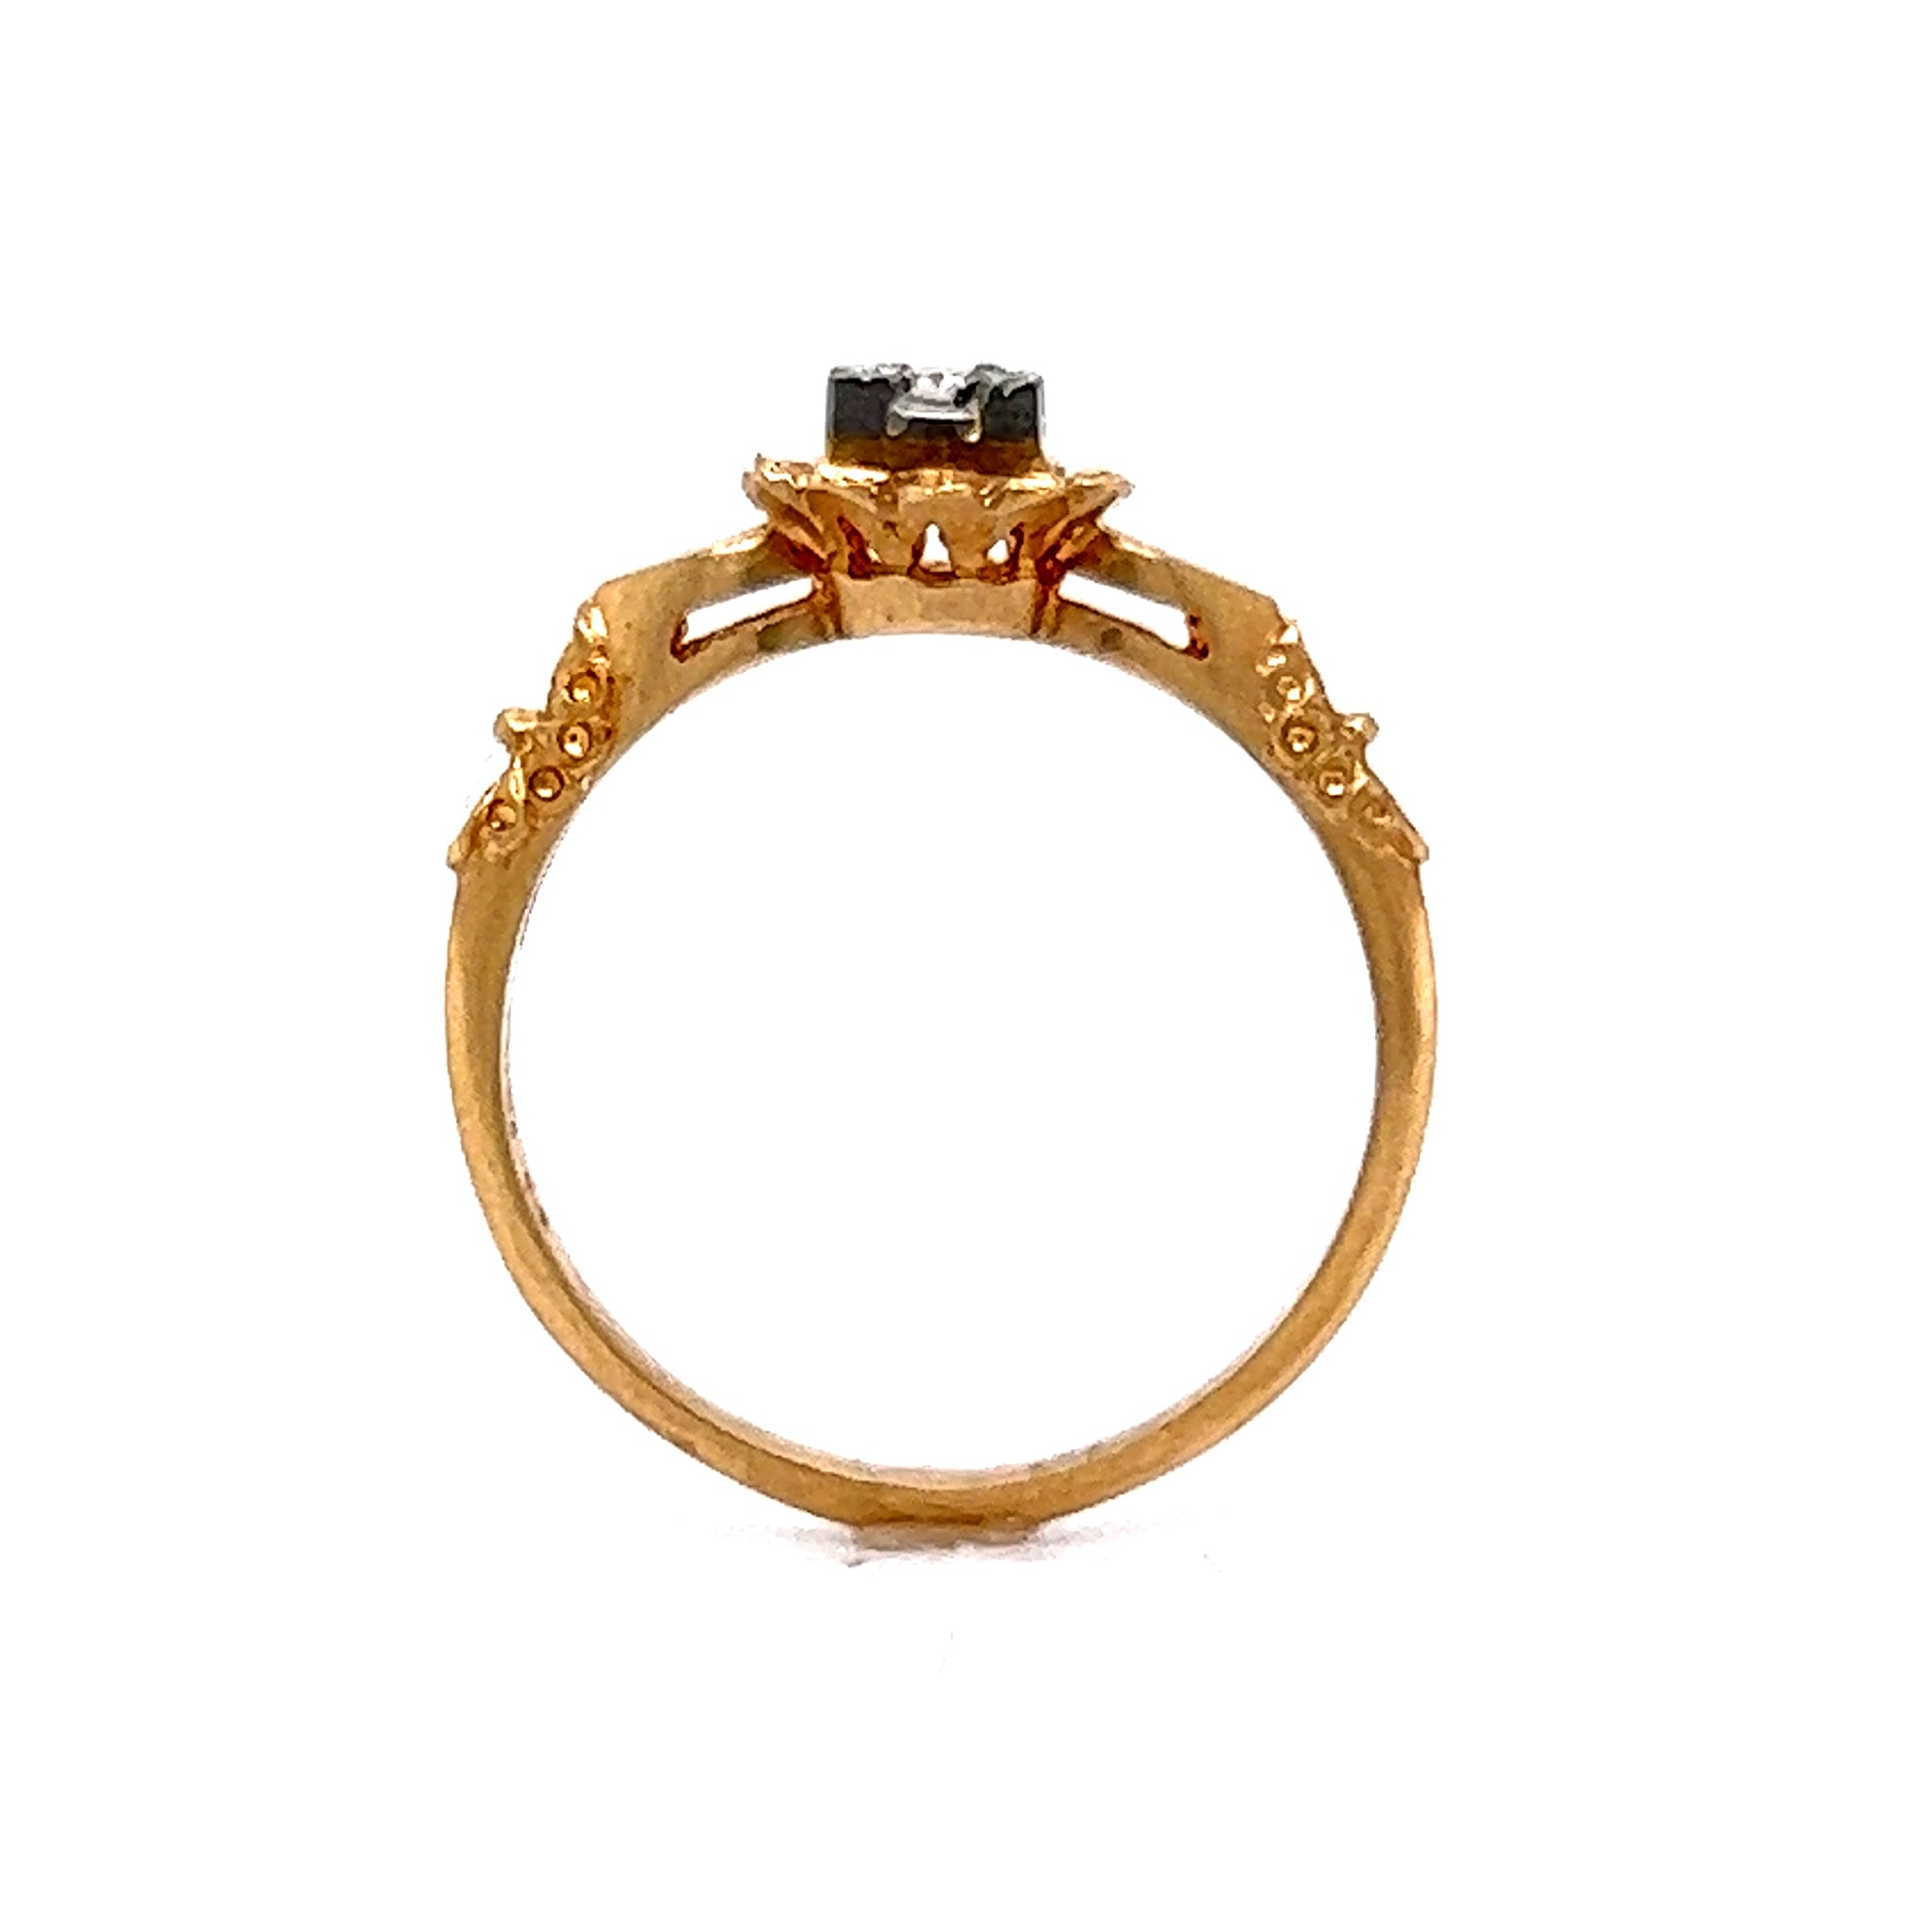 Delicate Retro Diamond Engagement Ring in 14k & 18k Gold